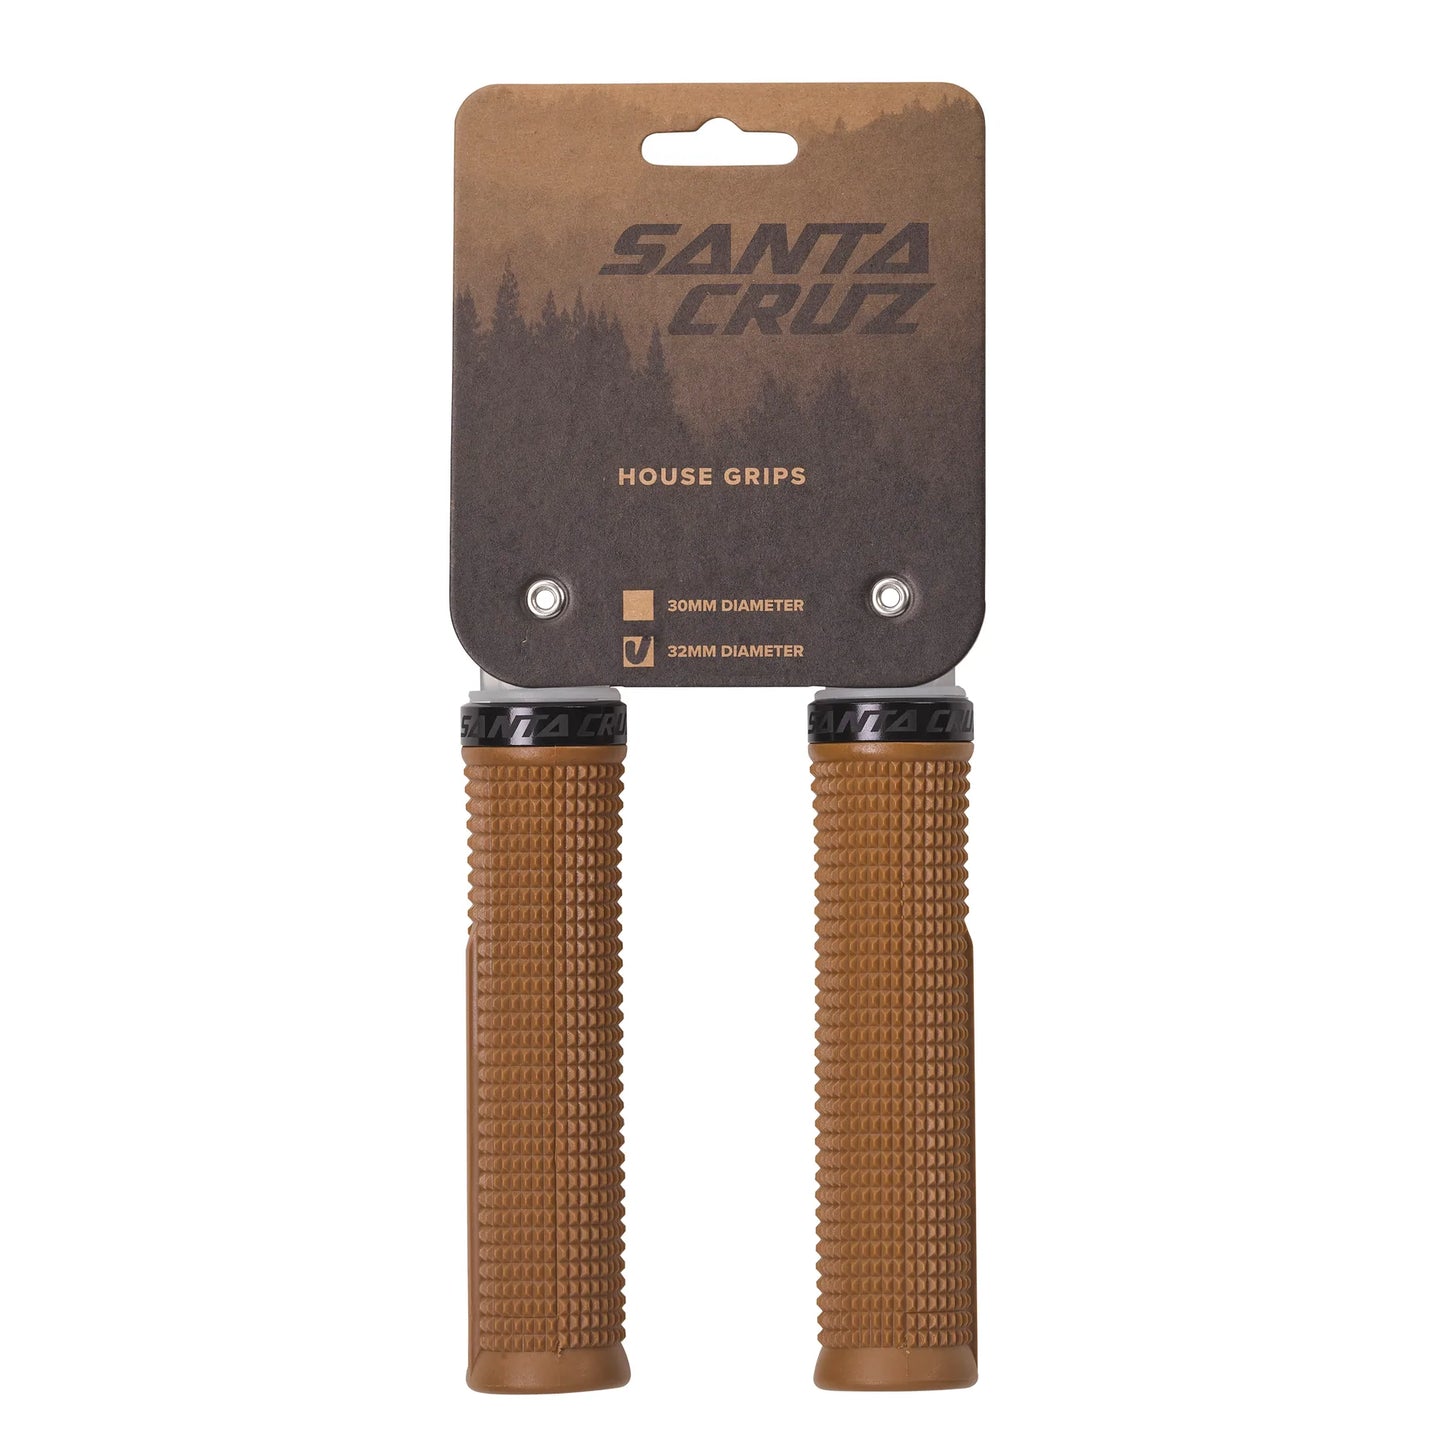 Santa Cruz House Grips - 32mm - Tan Tan  